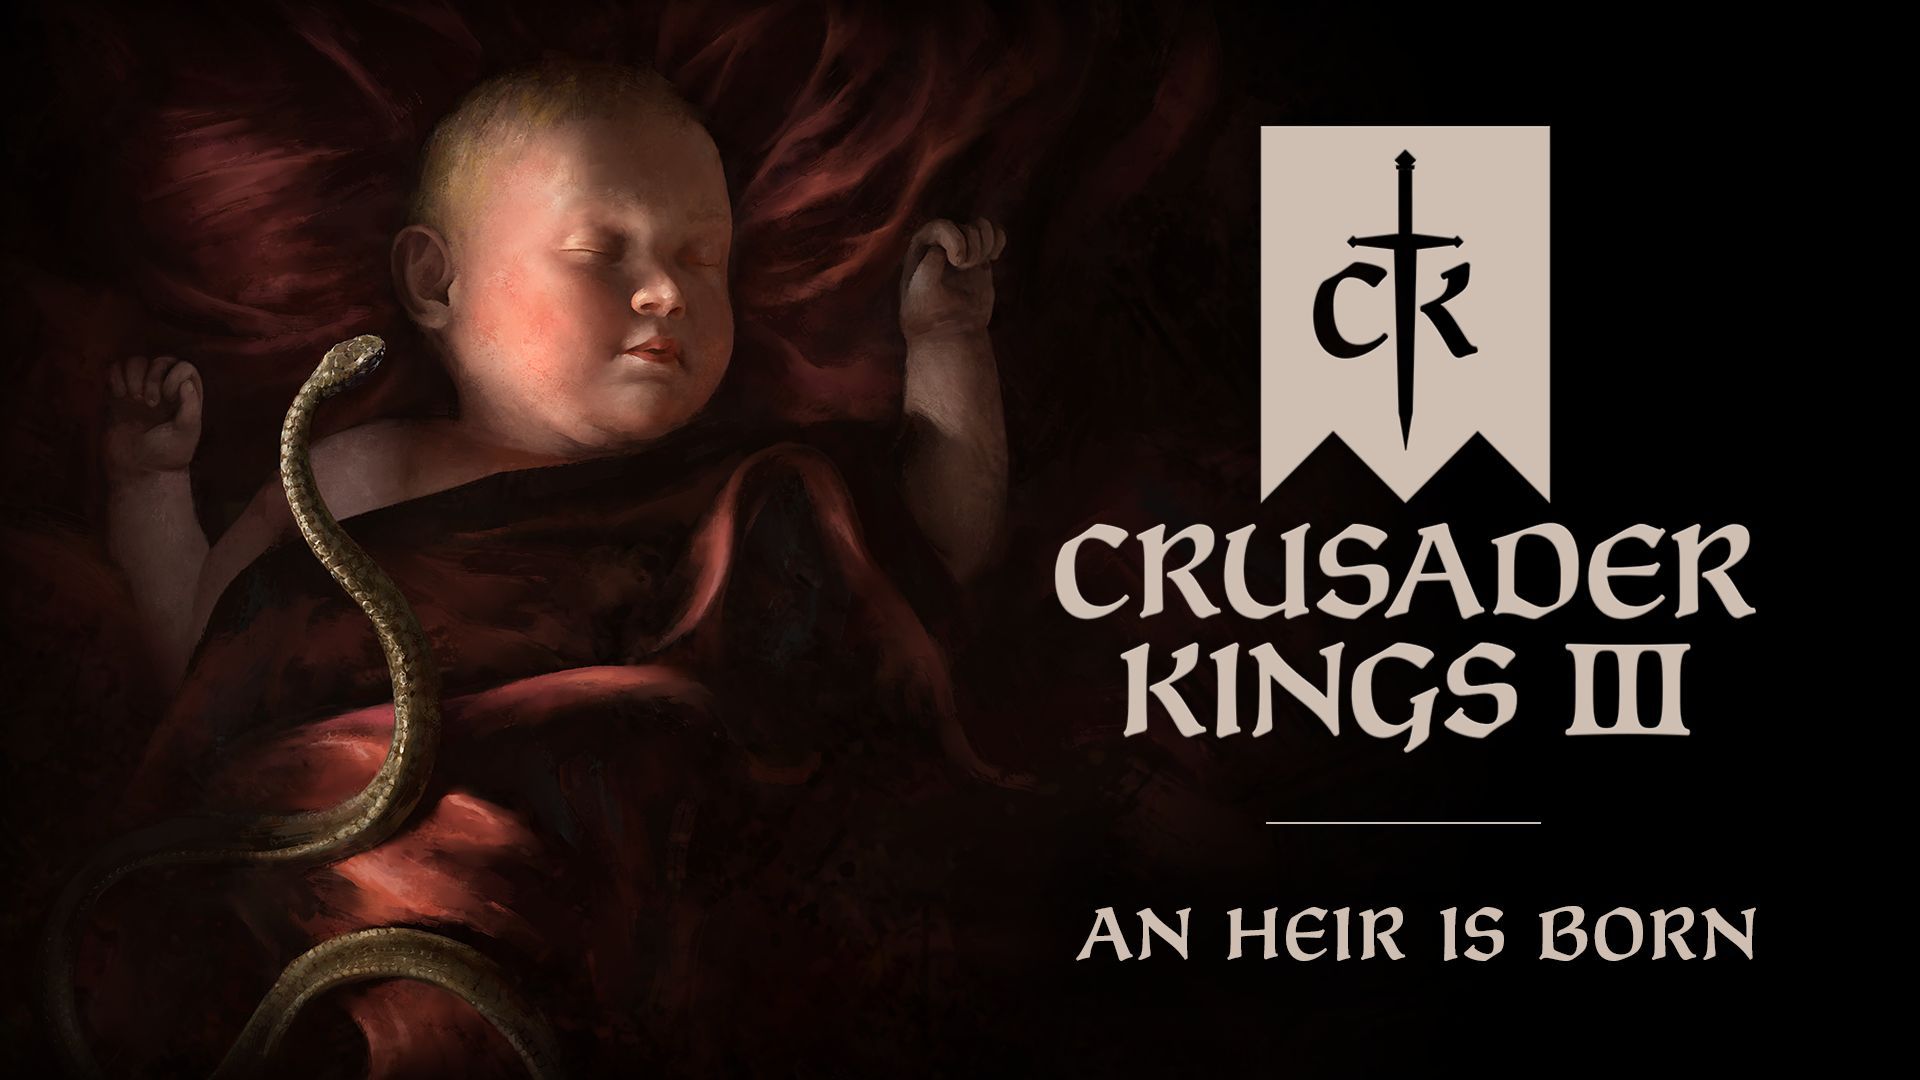 Crusader kings iii - a heir is born